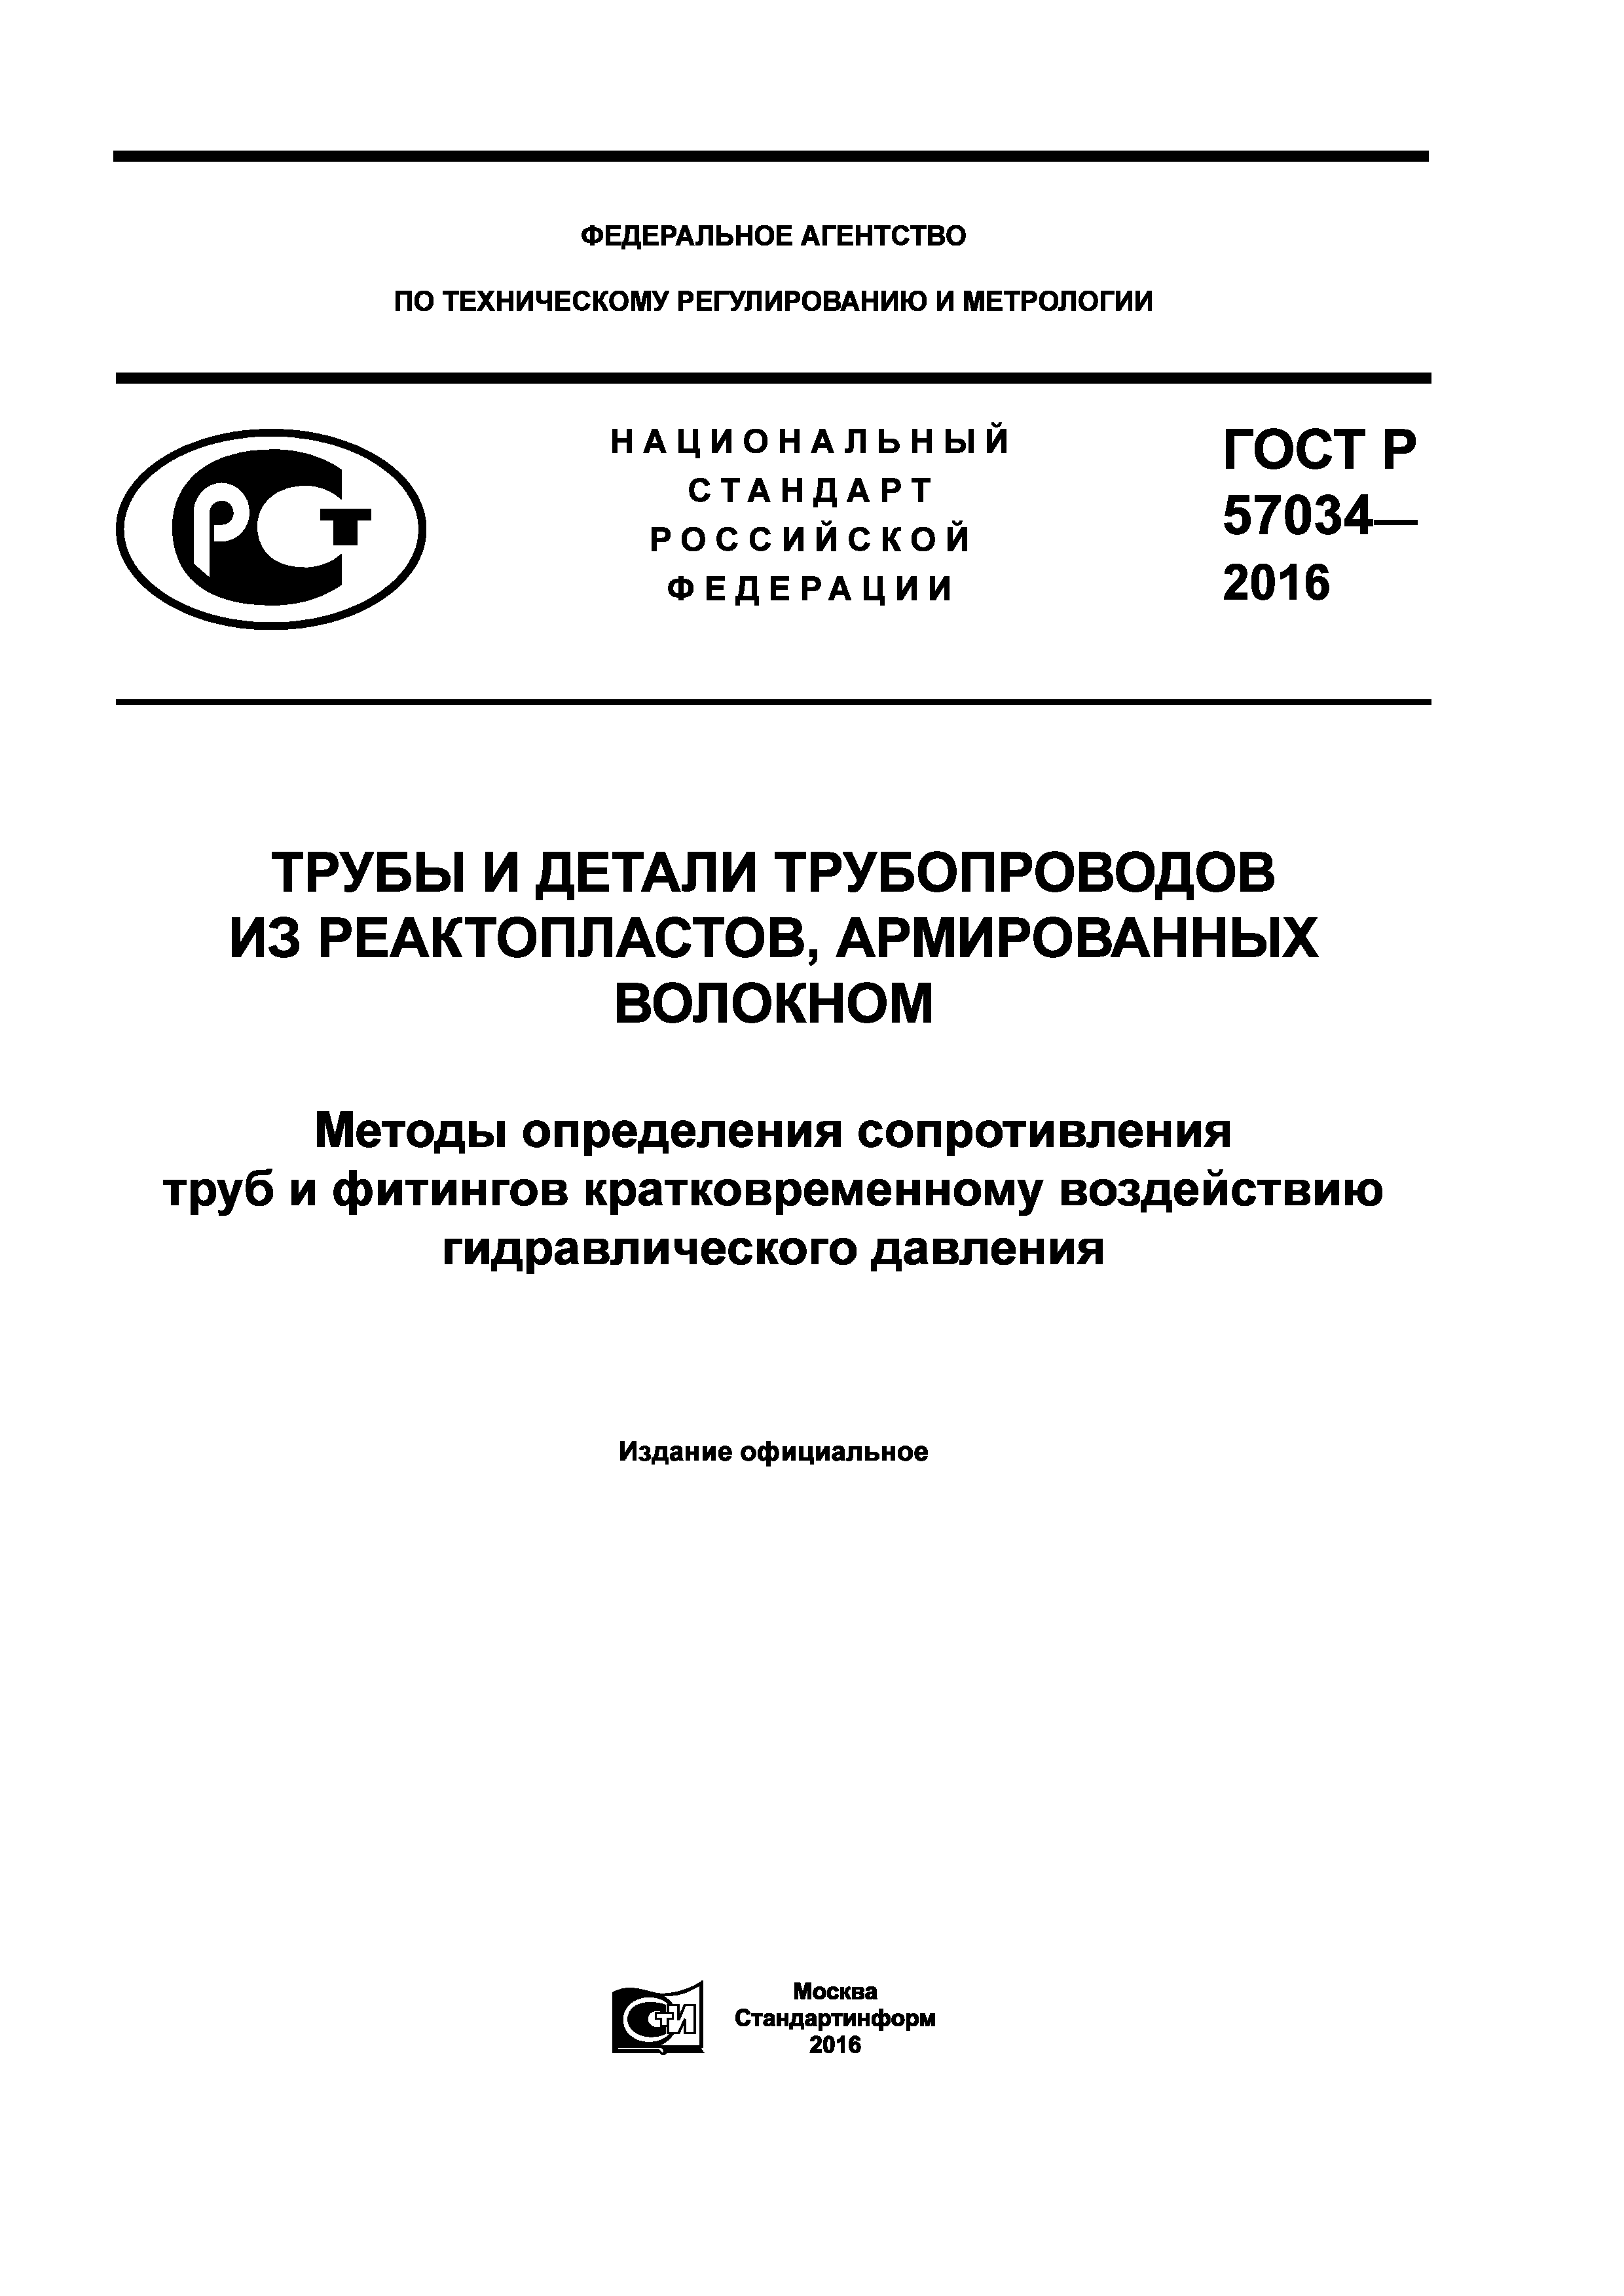 ГОСТ Р 57034-2016